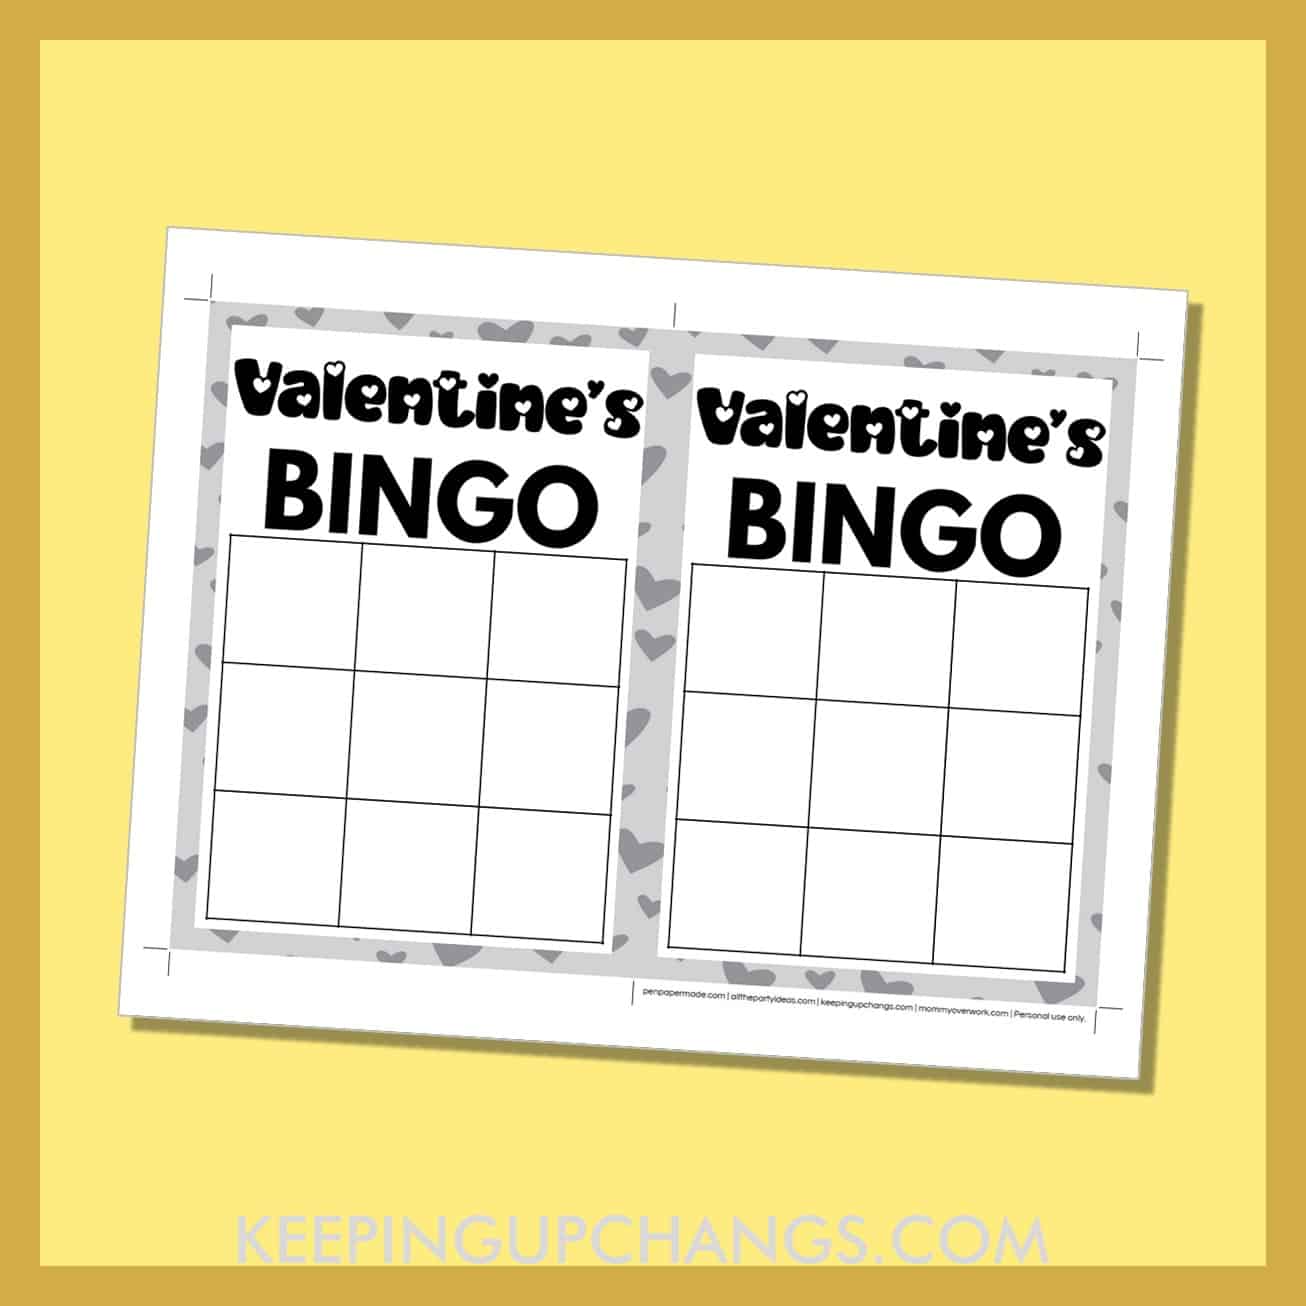 free valentine's day bingo 3x3 grid black white game board blank template.